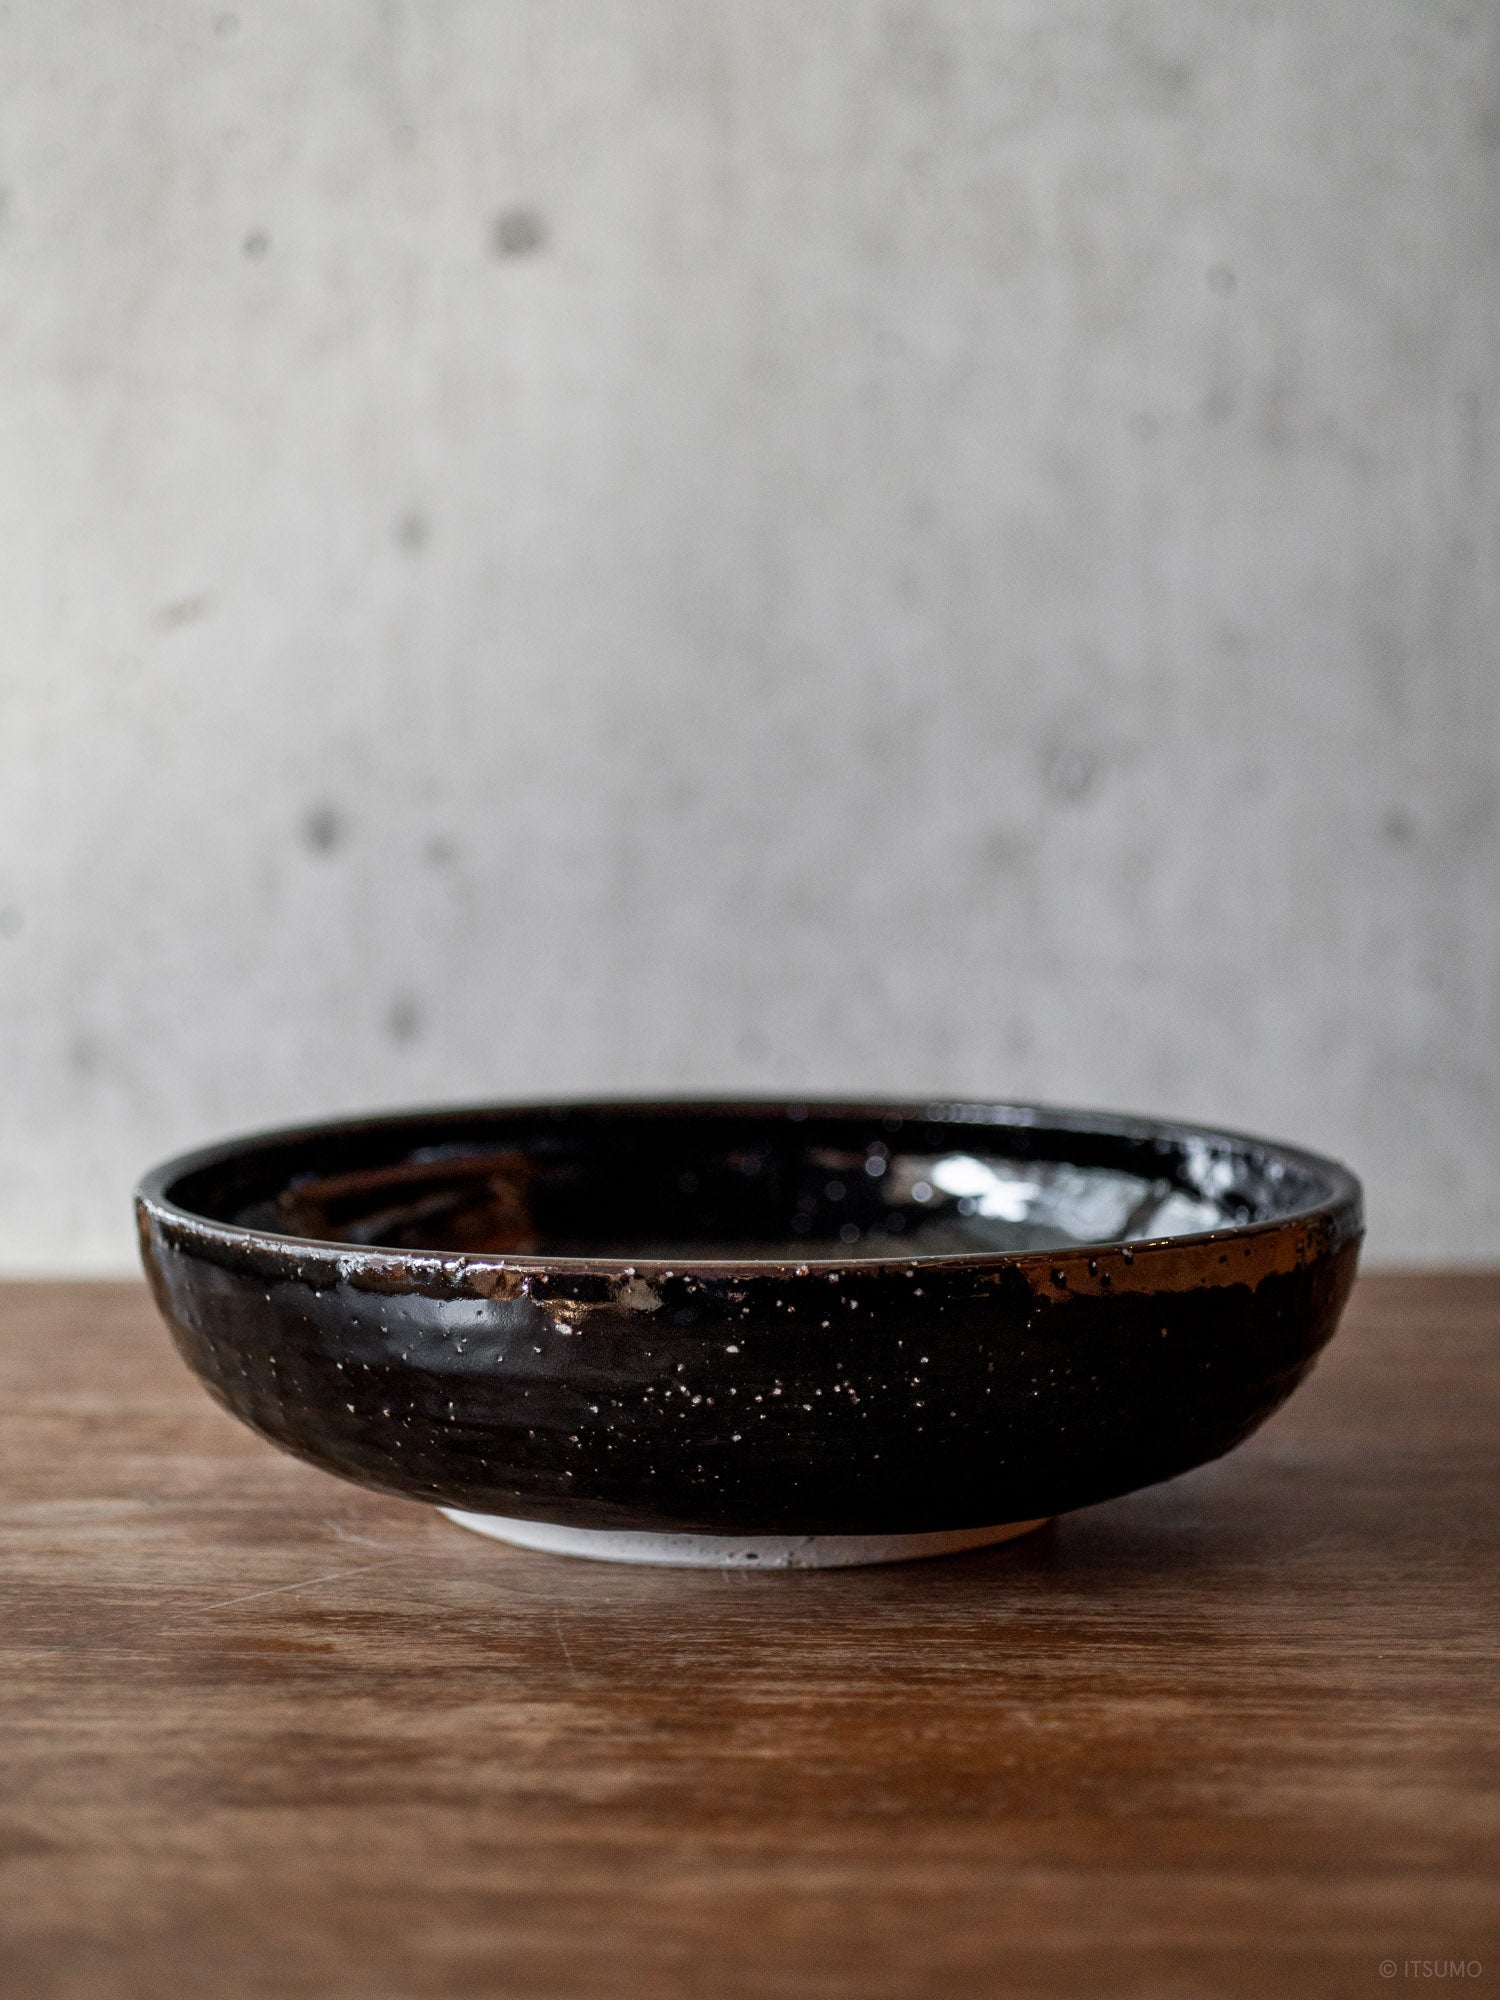 Azmaya iga ware ceramic large serving bowl in a black kuroame glaze